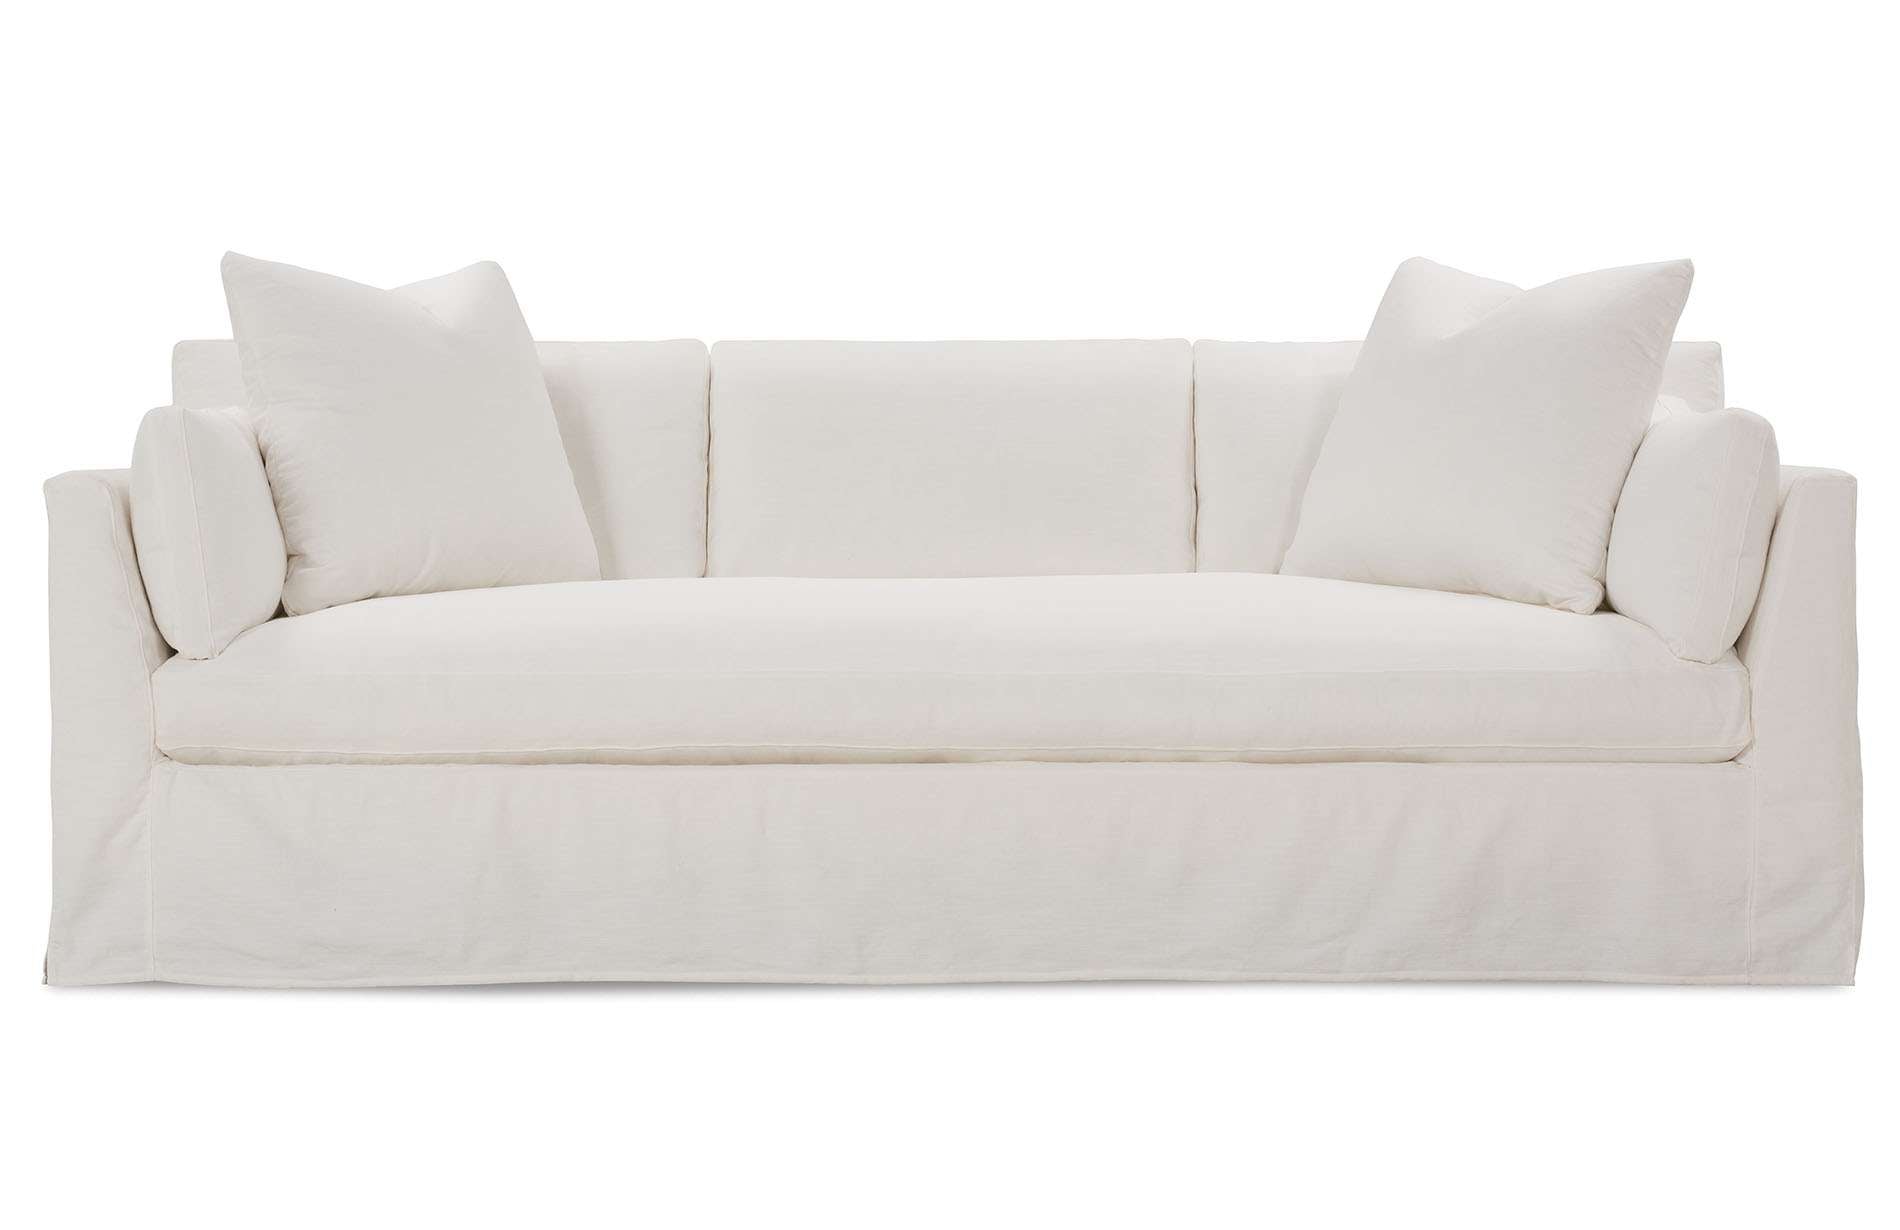 Boden Slipcover Sofa - Rug & Home